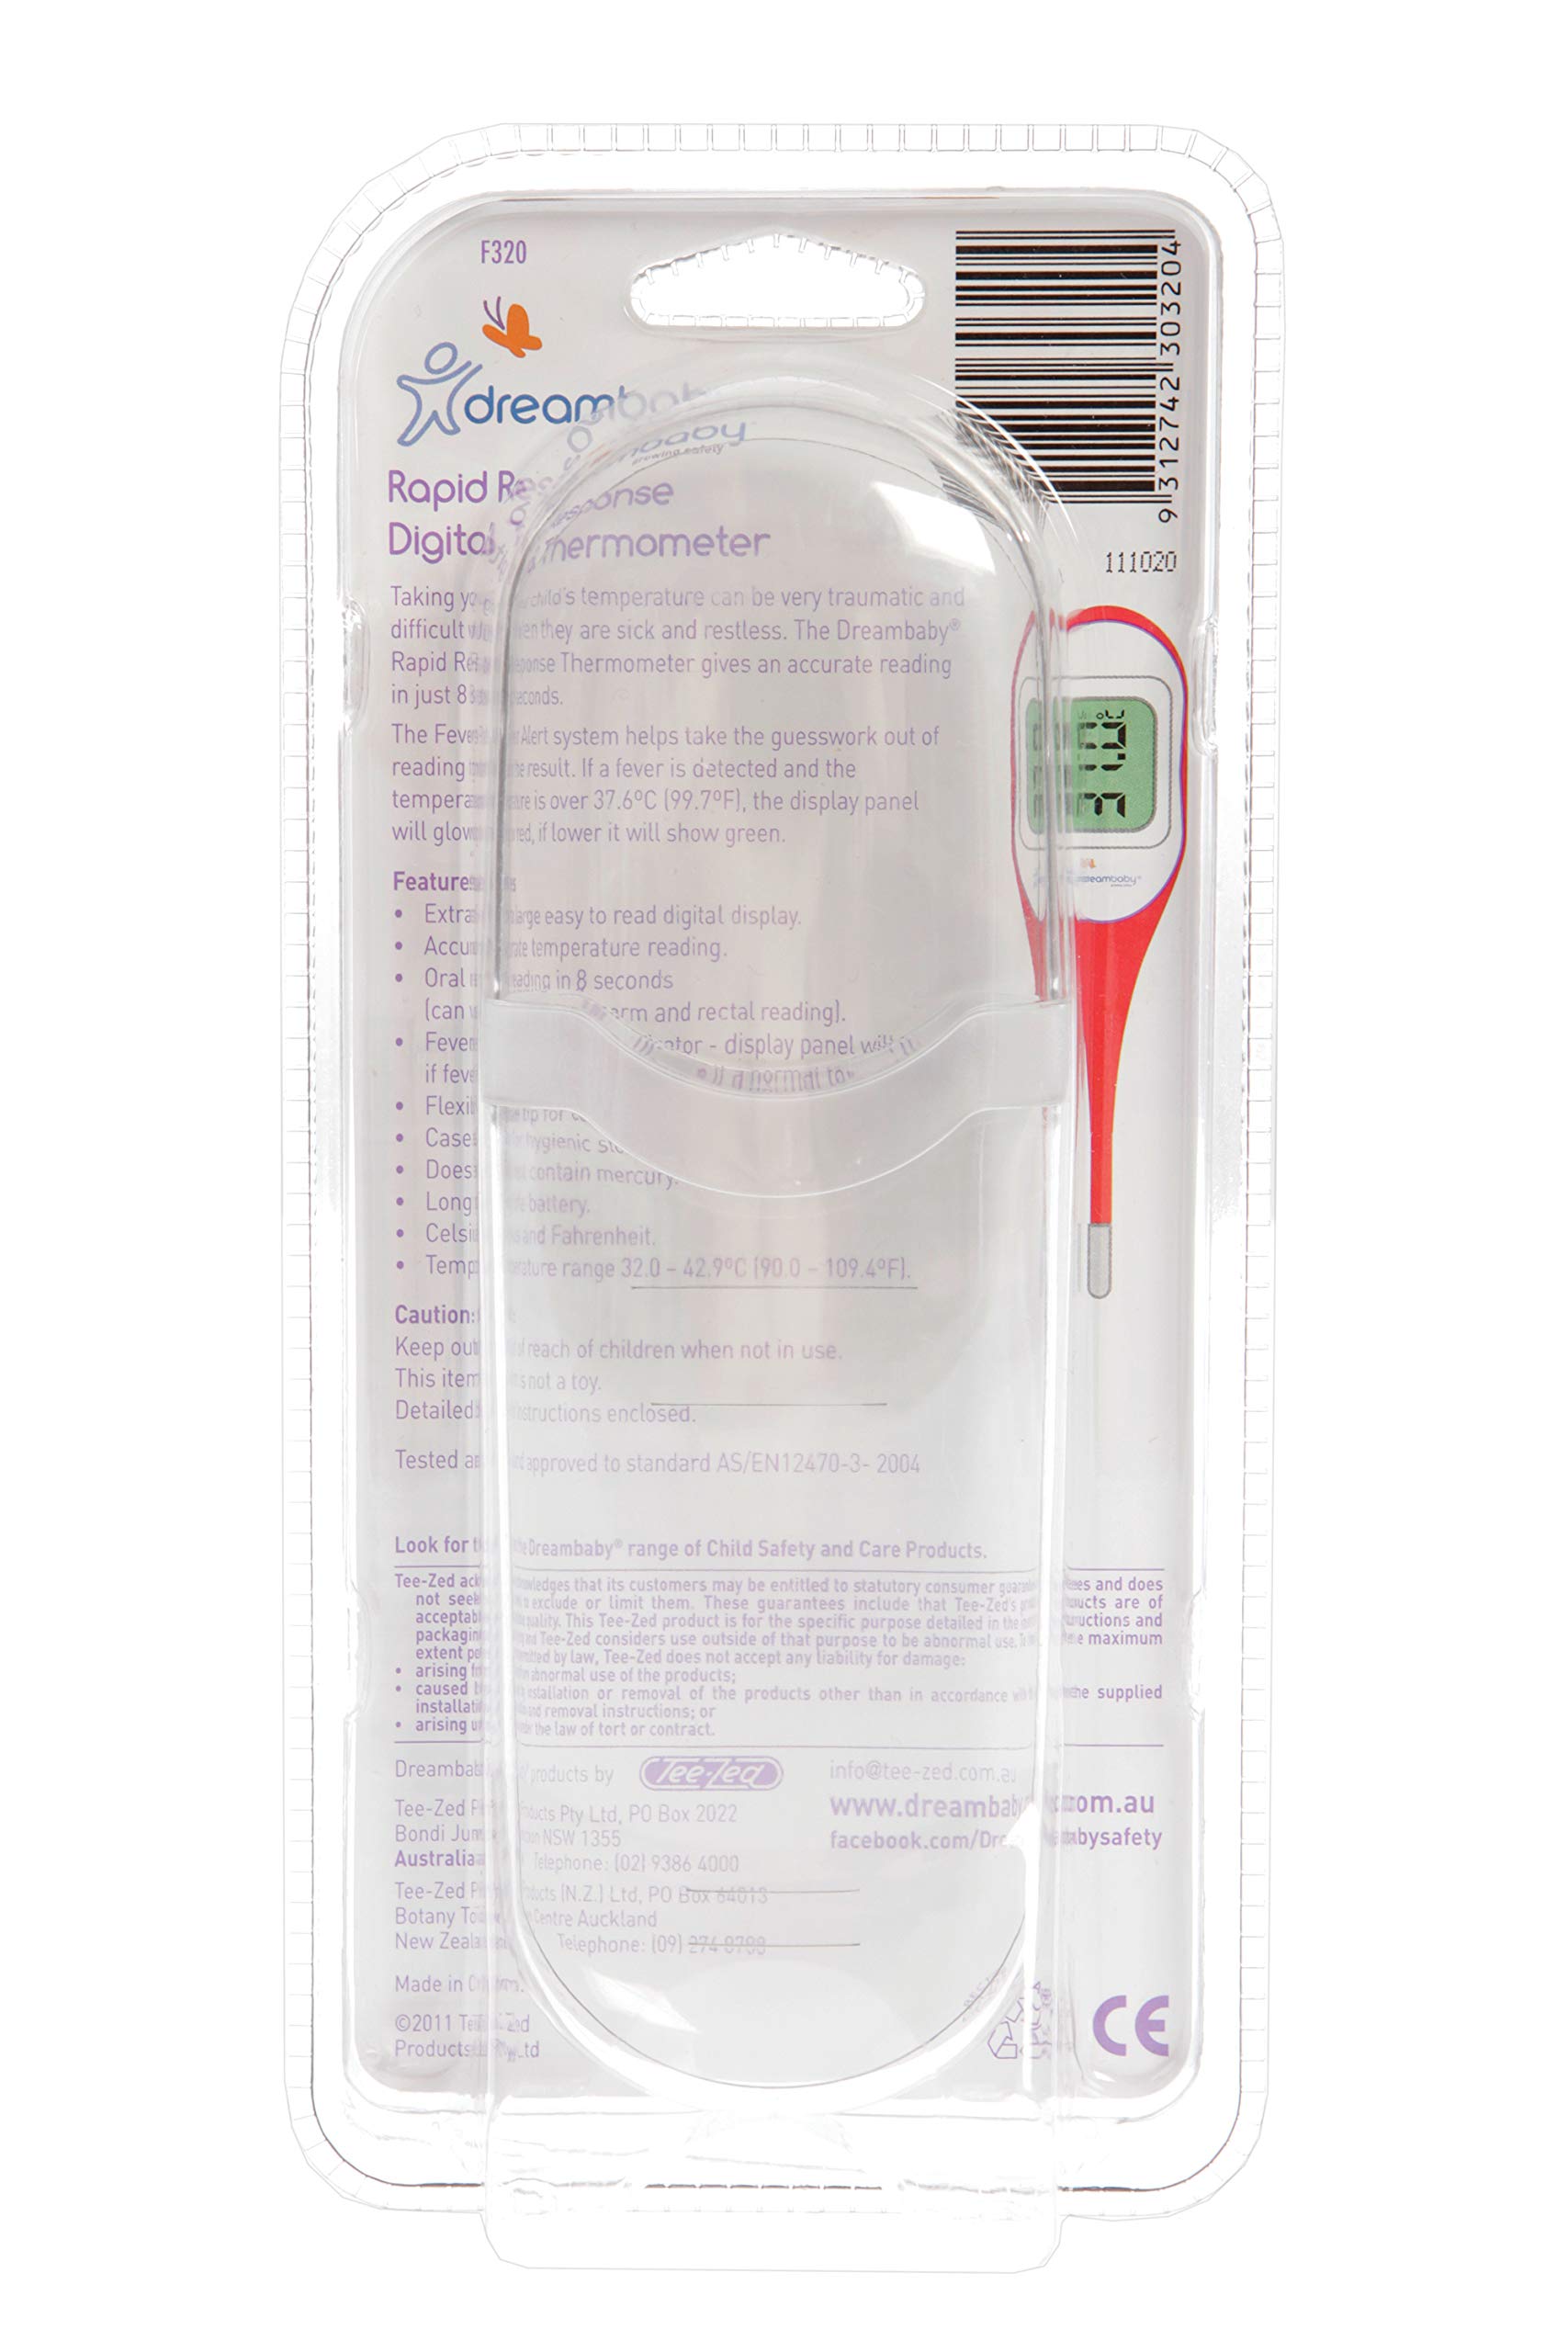 Dreambaby Rapid Response Digital Thermometer with Fever Alert, Orange